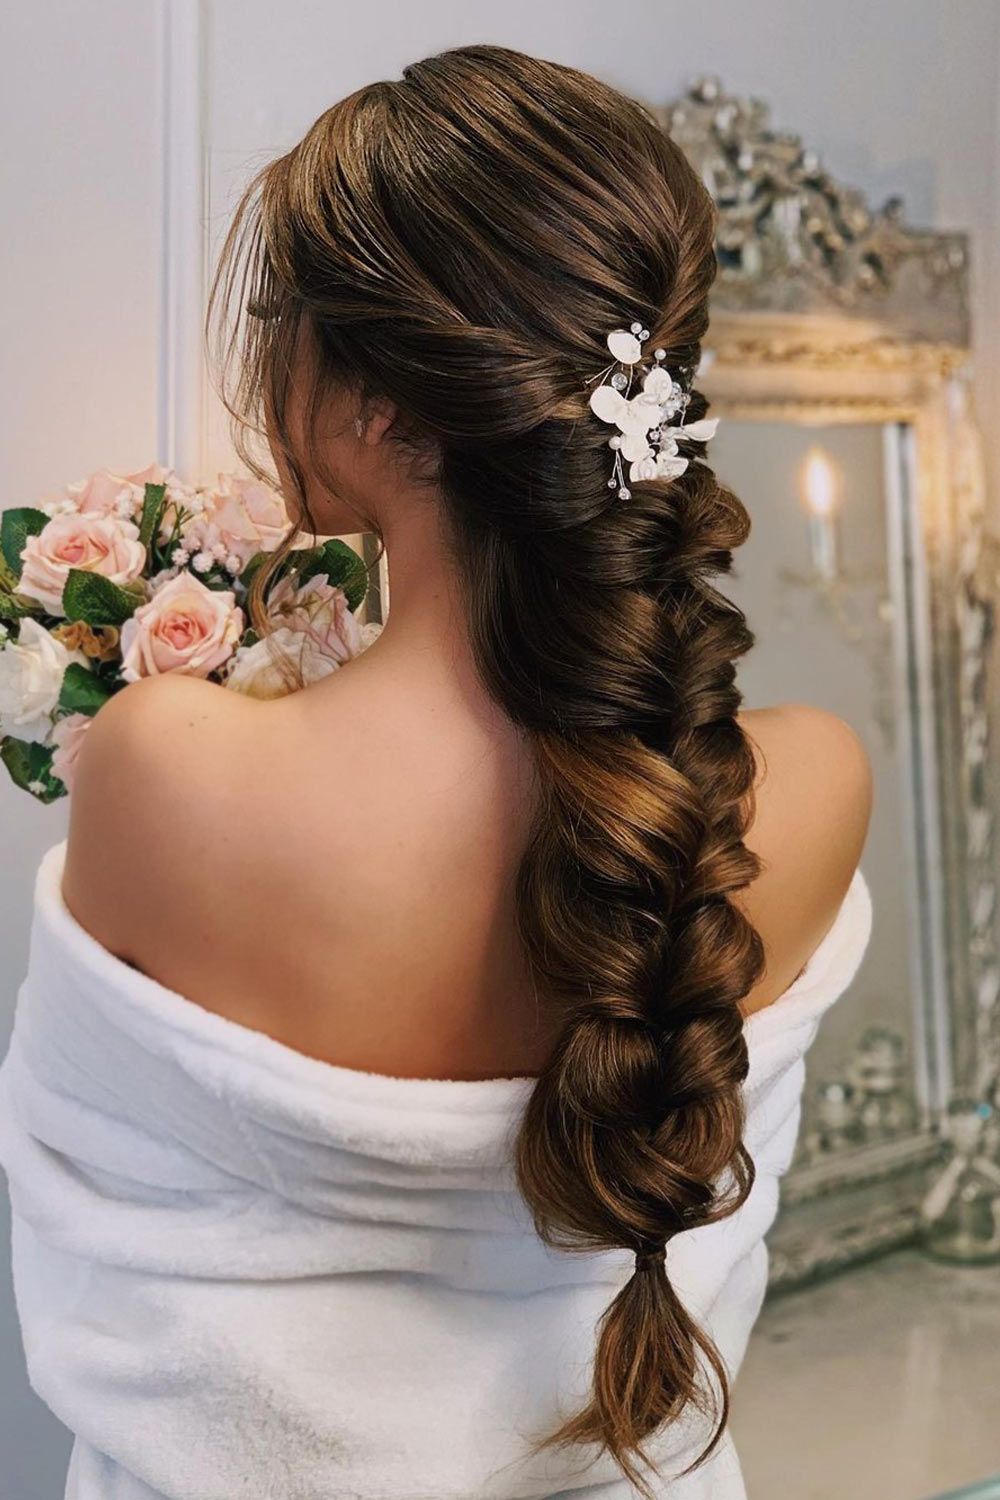 50 Elegant Wedding Hairstyles For Long Hair – Love Hairstyles Throughout Massive Wedding Hairstyle (View 21 of 25)